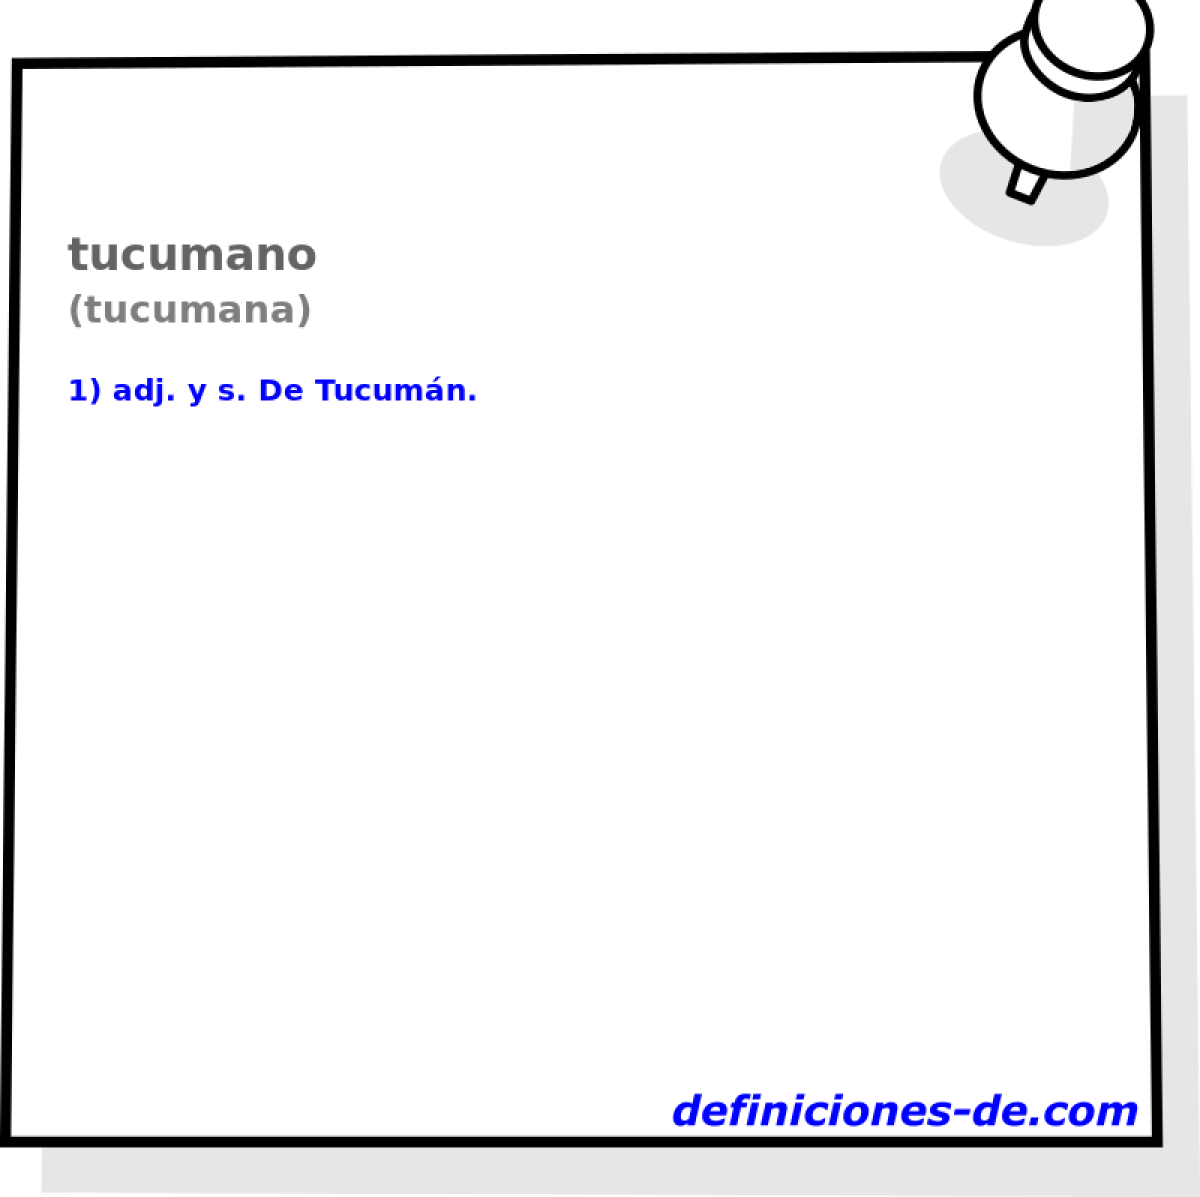 tucumano (tucumana)